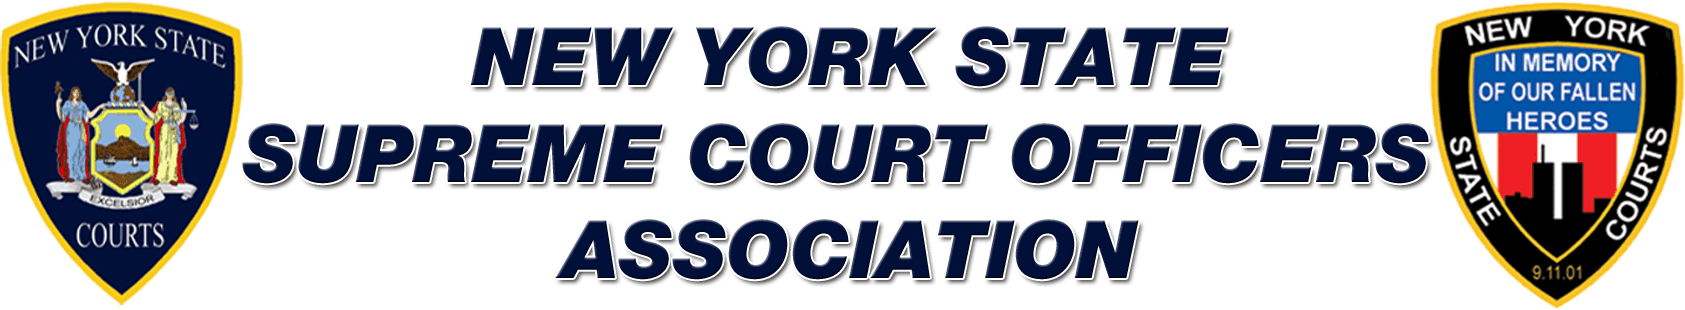 New York Supreme Court Logo - Supreme Court Officers Association | SCOA